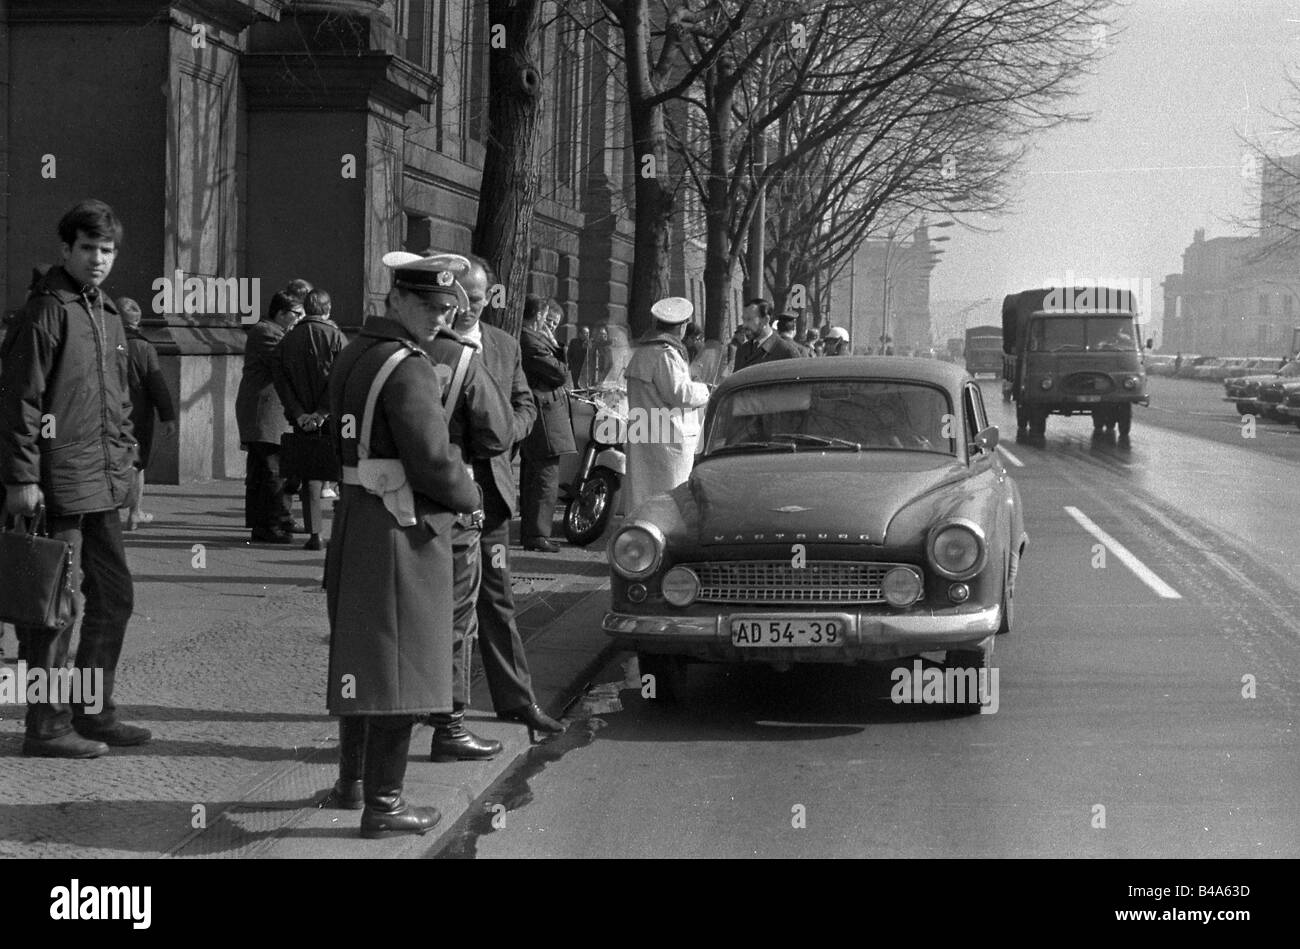 Police, Allemagne de l'est, police de la circulation, contrôle de la circulation, Berlin, 1972, Banque D'Images